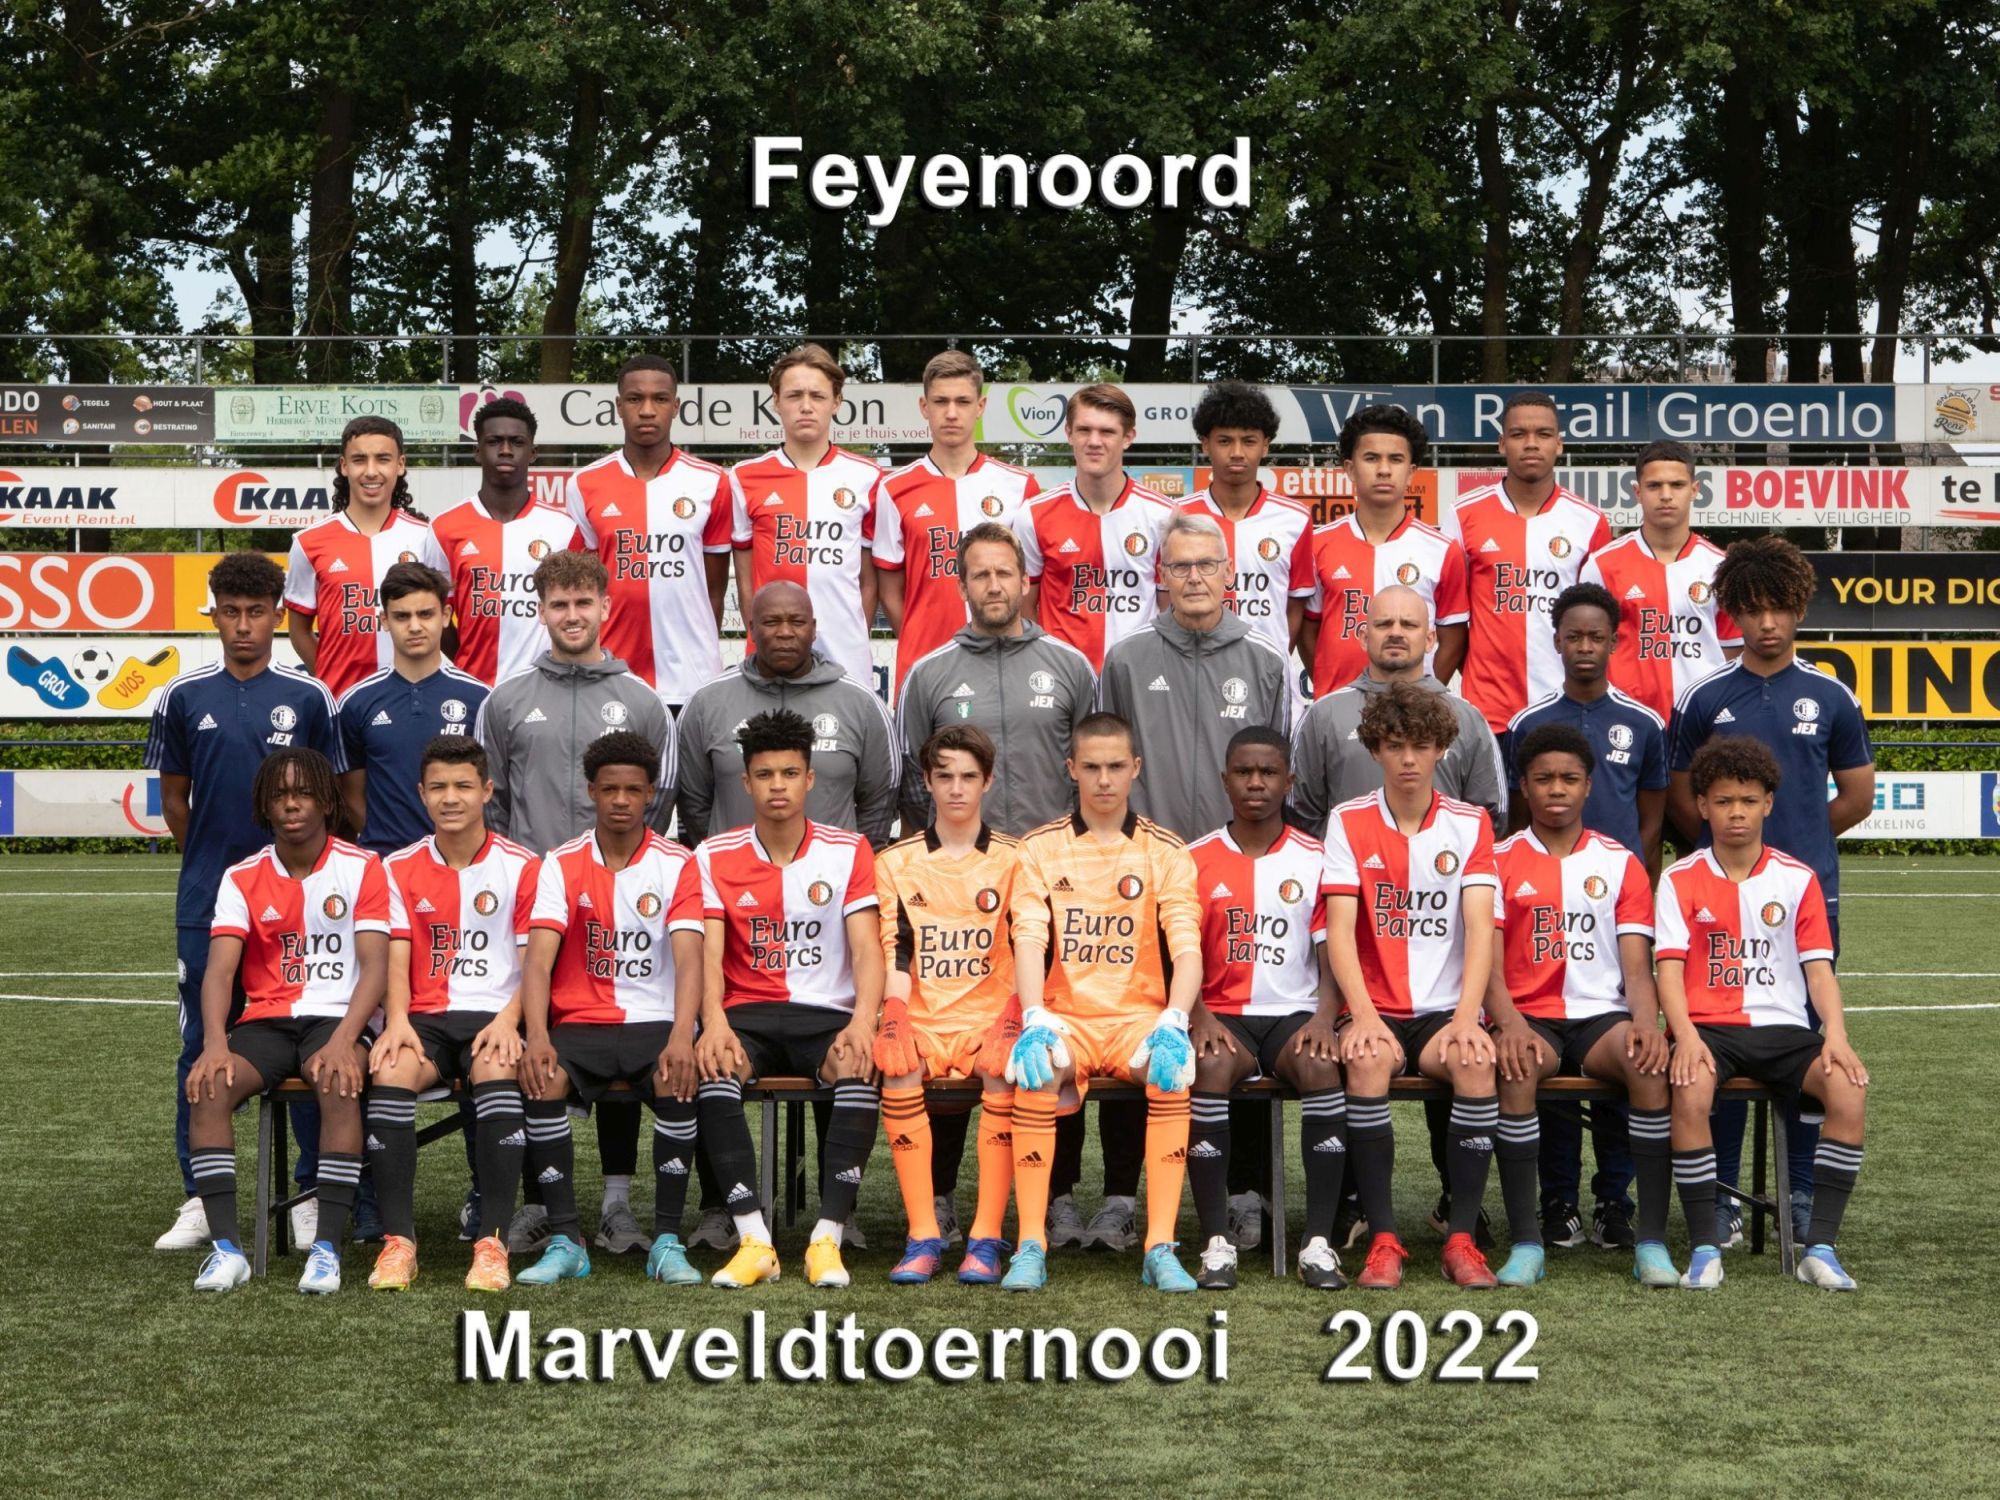 Marveld Tournament 2022 - Team Feyenoord